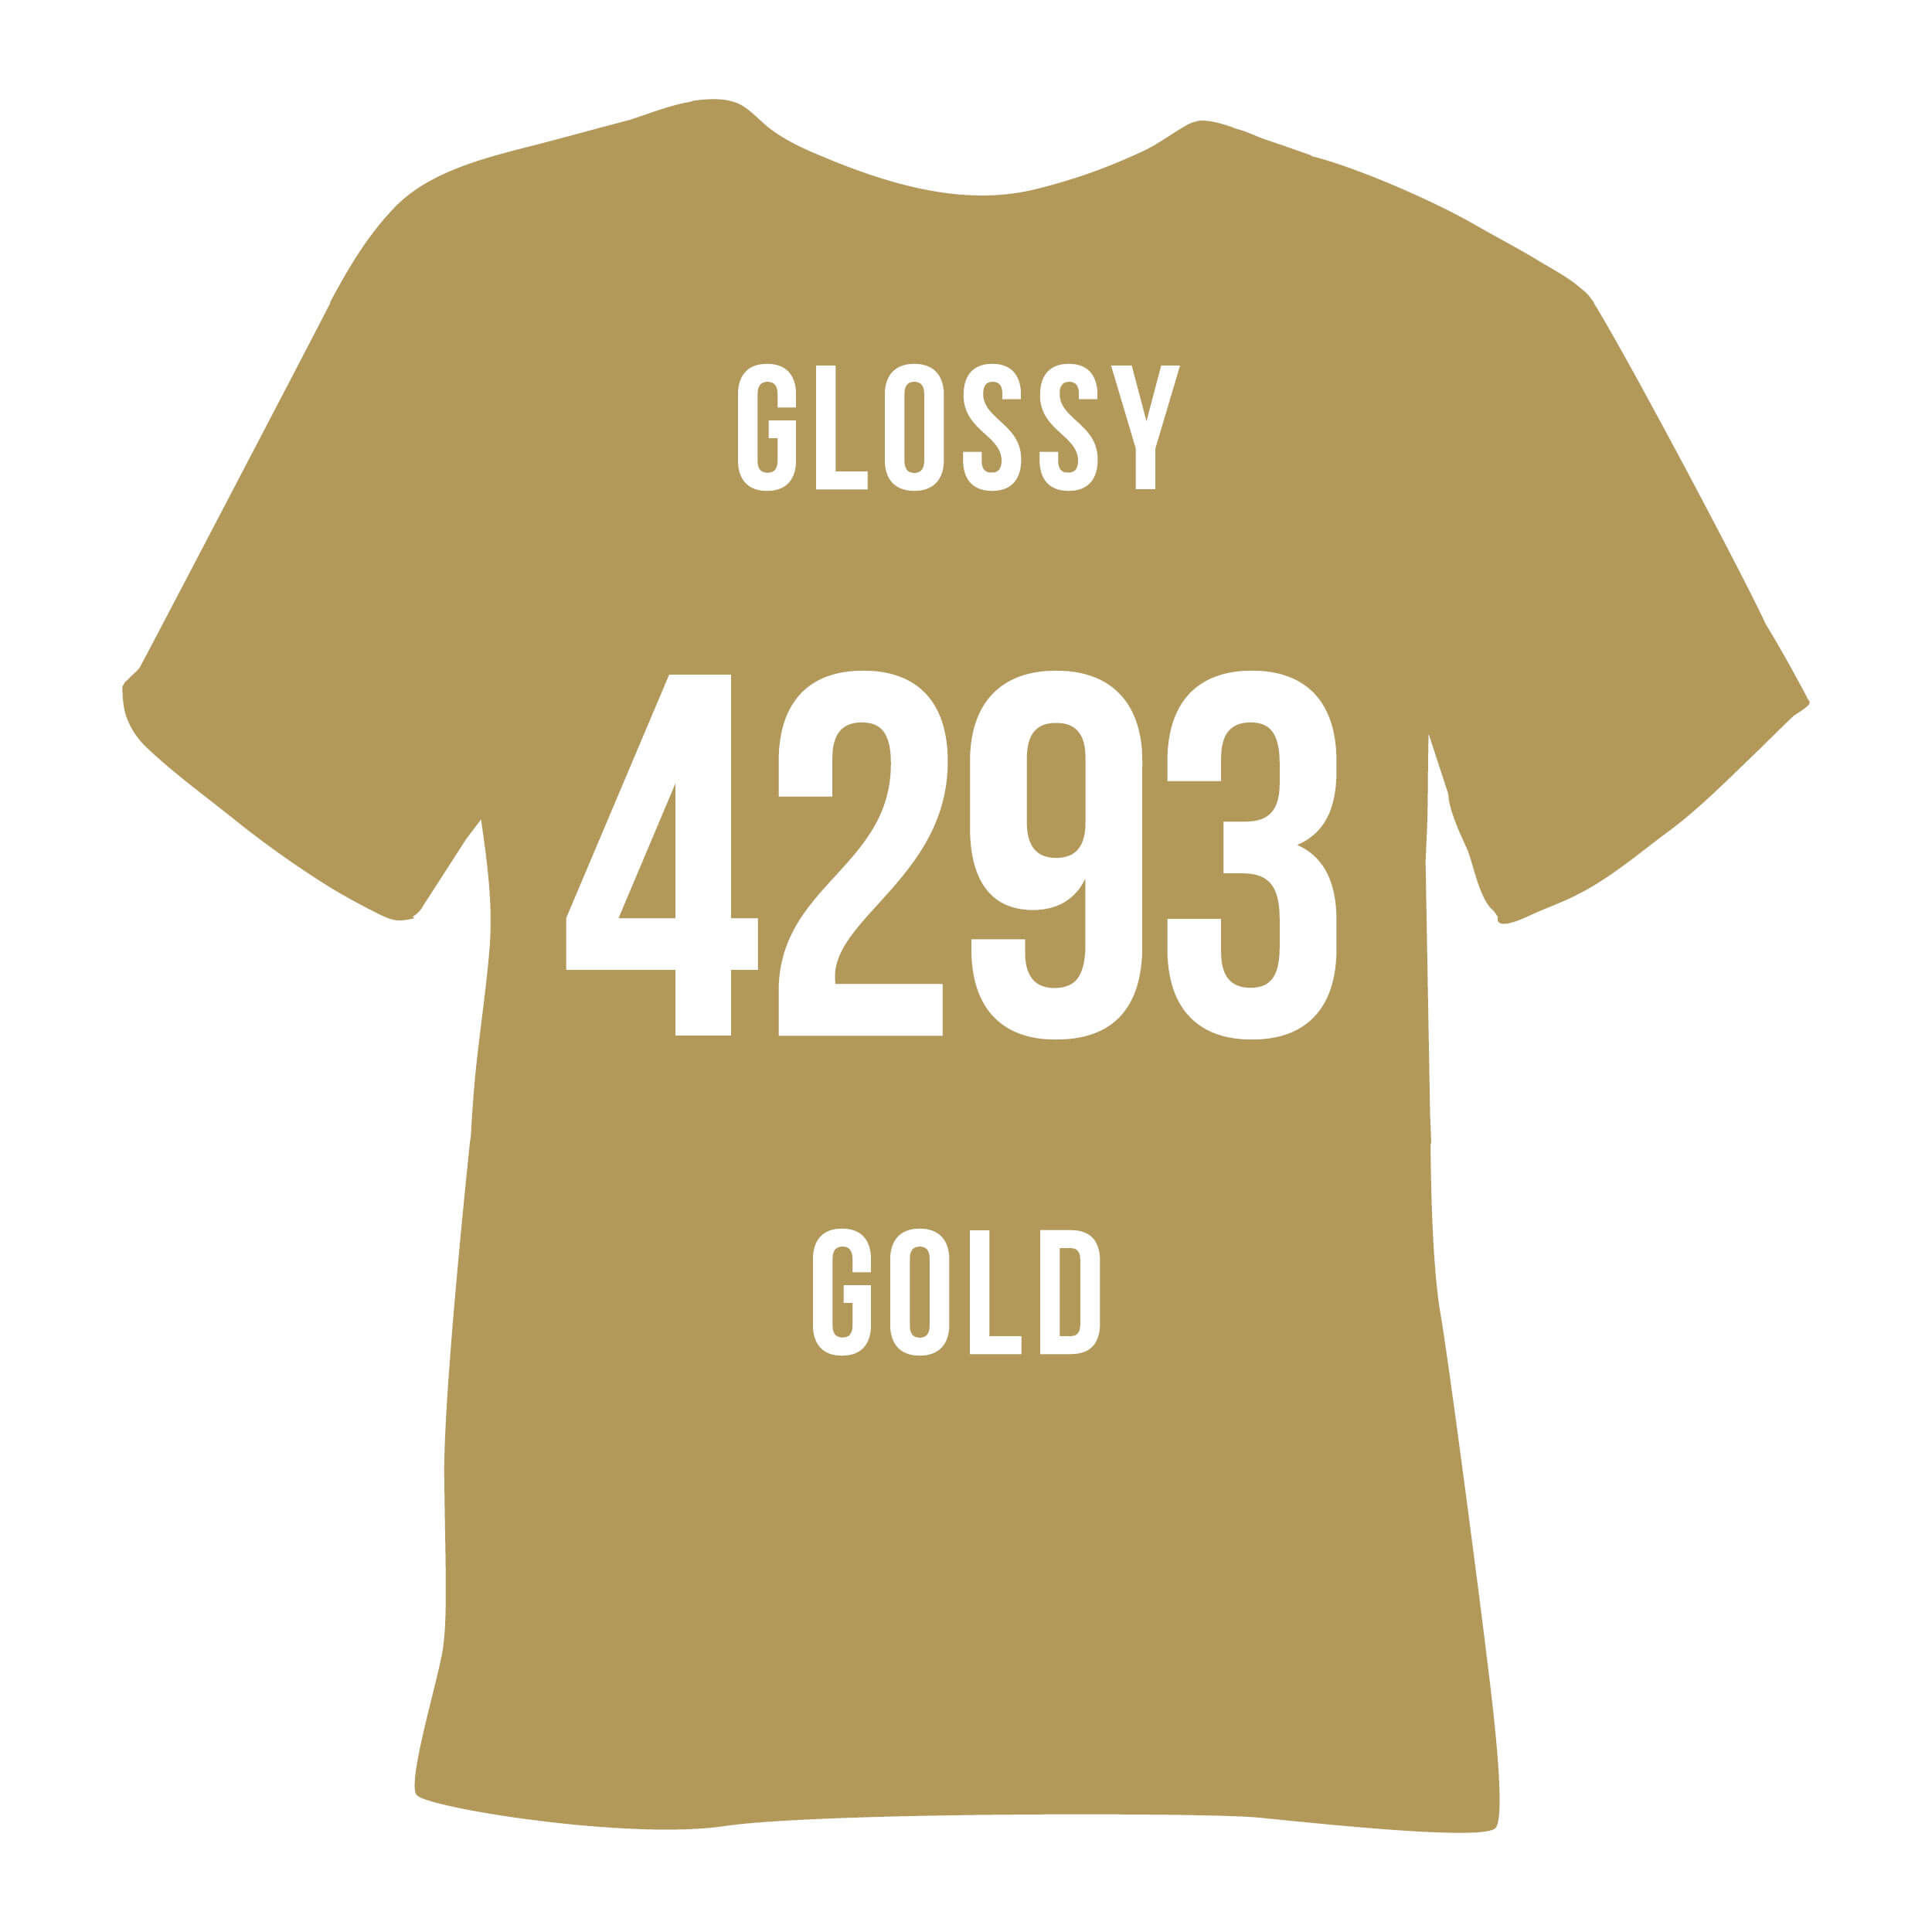 4293 Glossy Gold (Glossy)